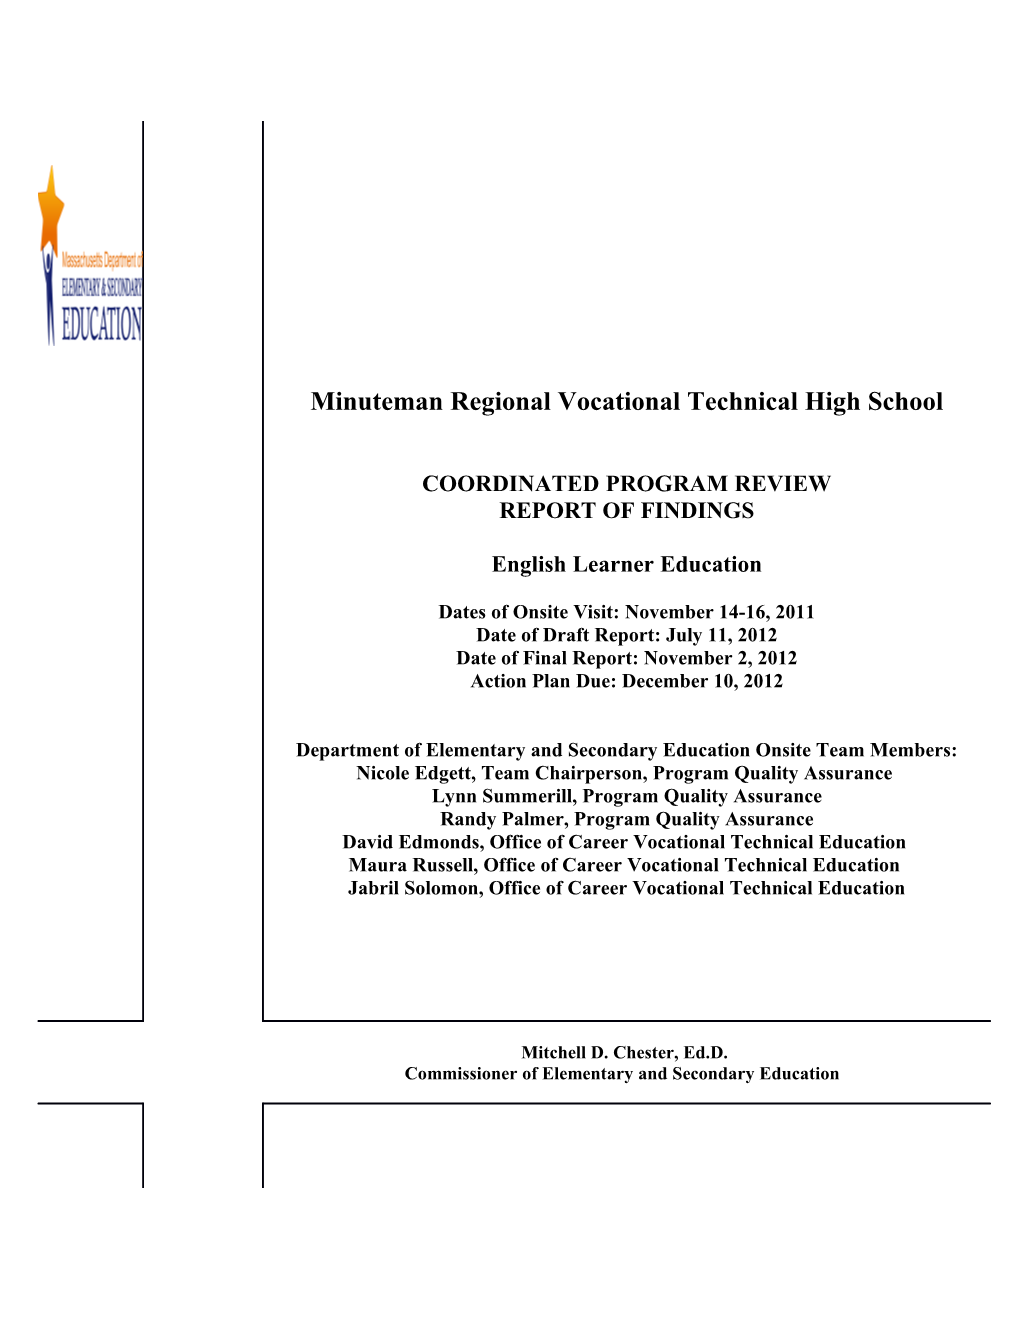 ELL CPR Report Minuteman Regional Vocational Technical High School 2012